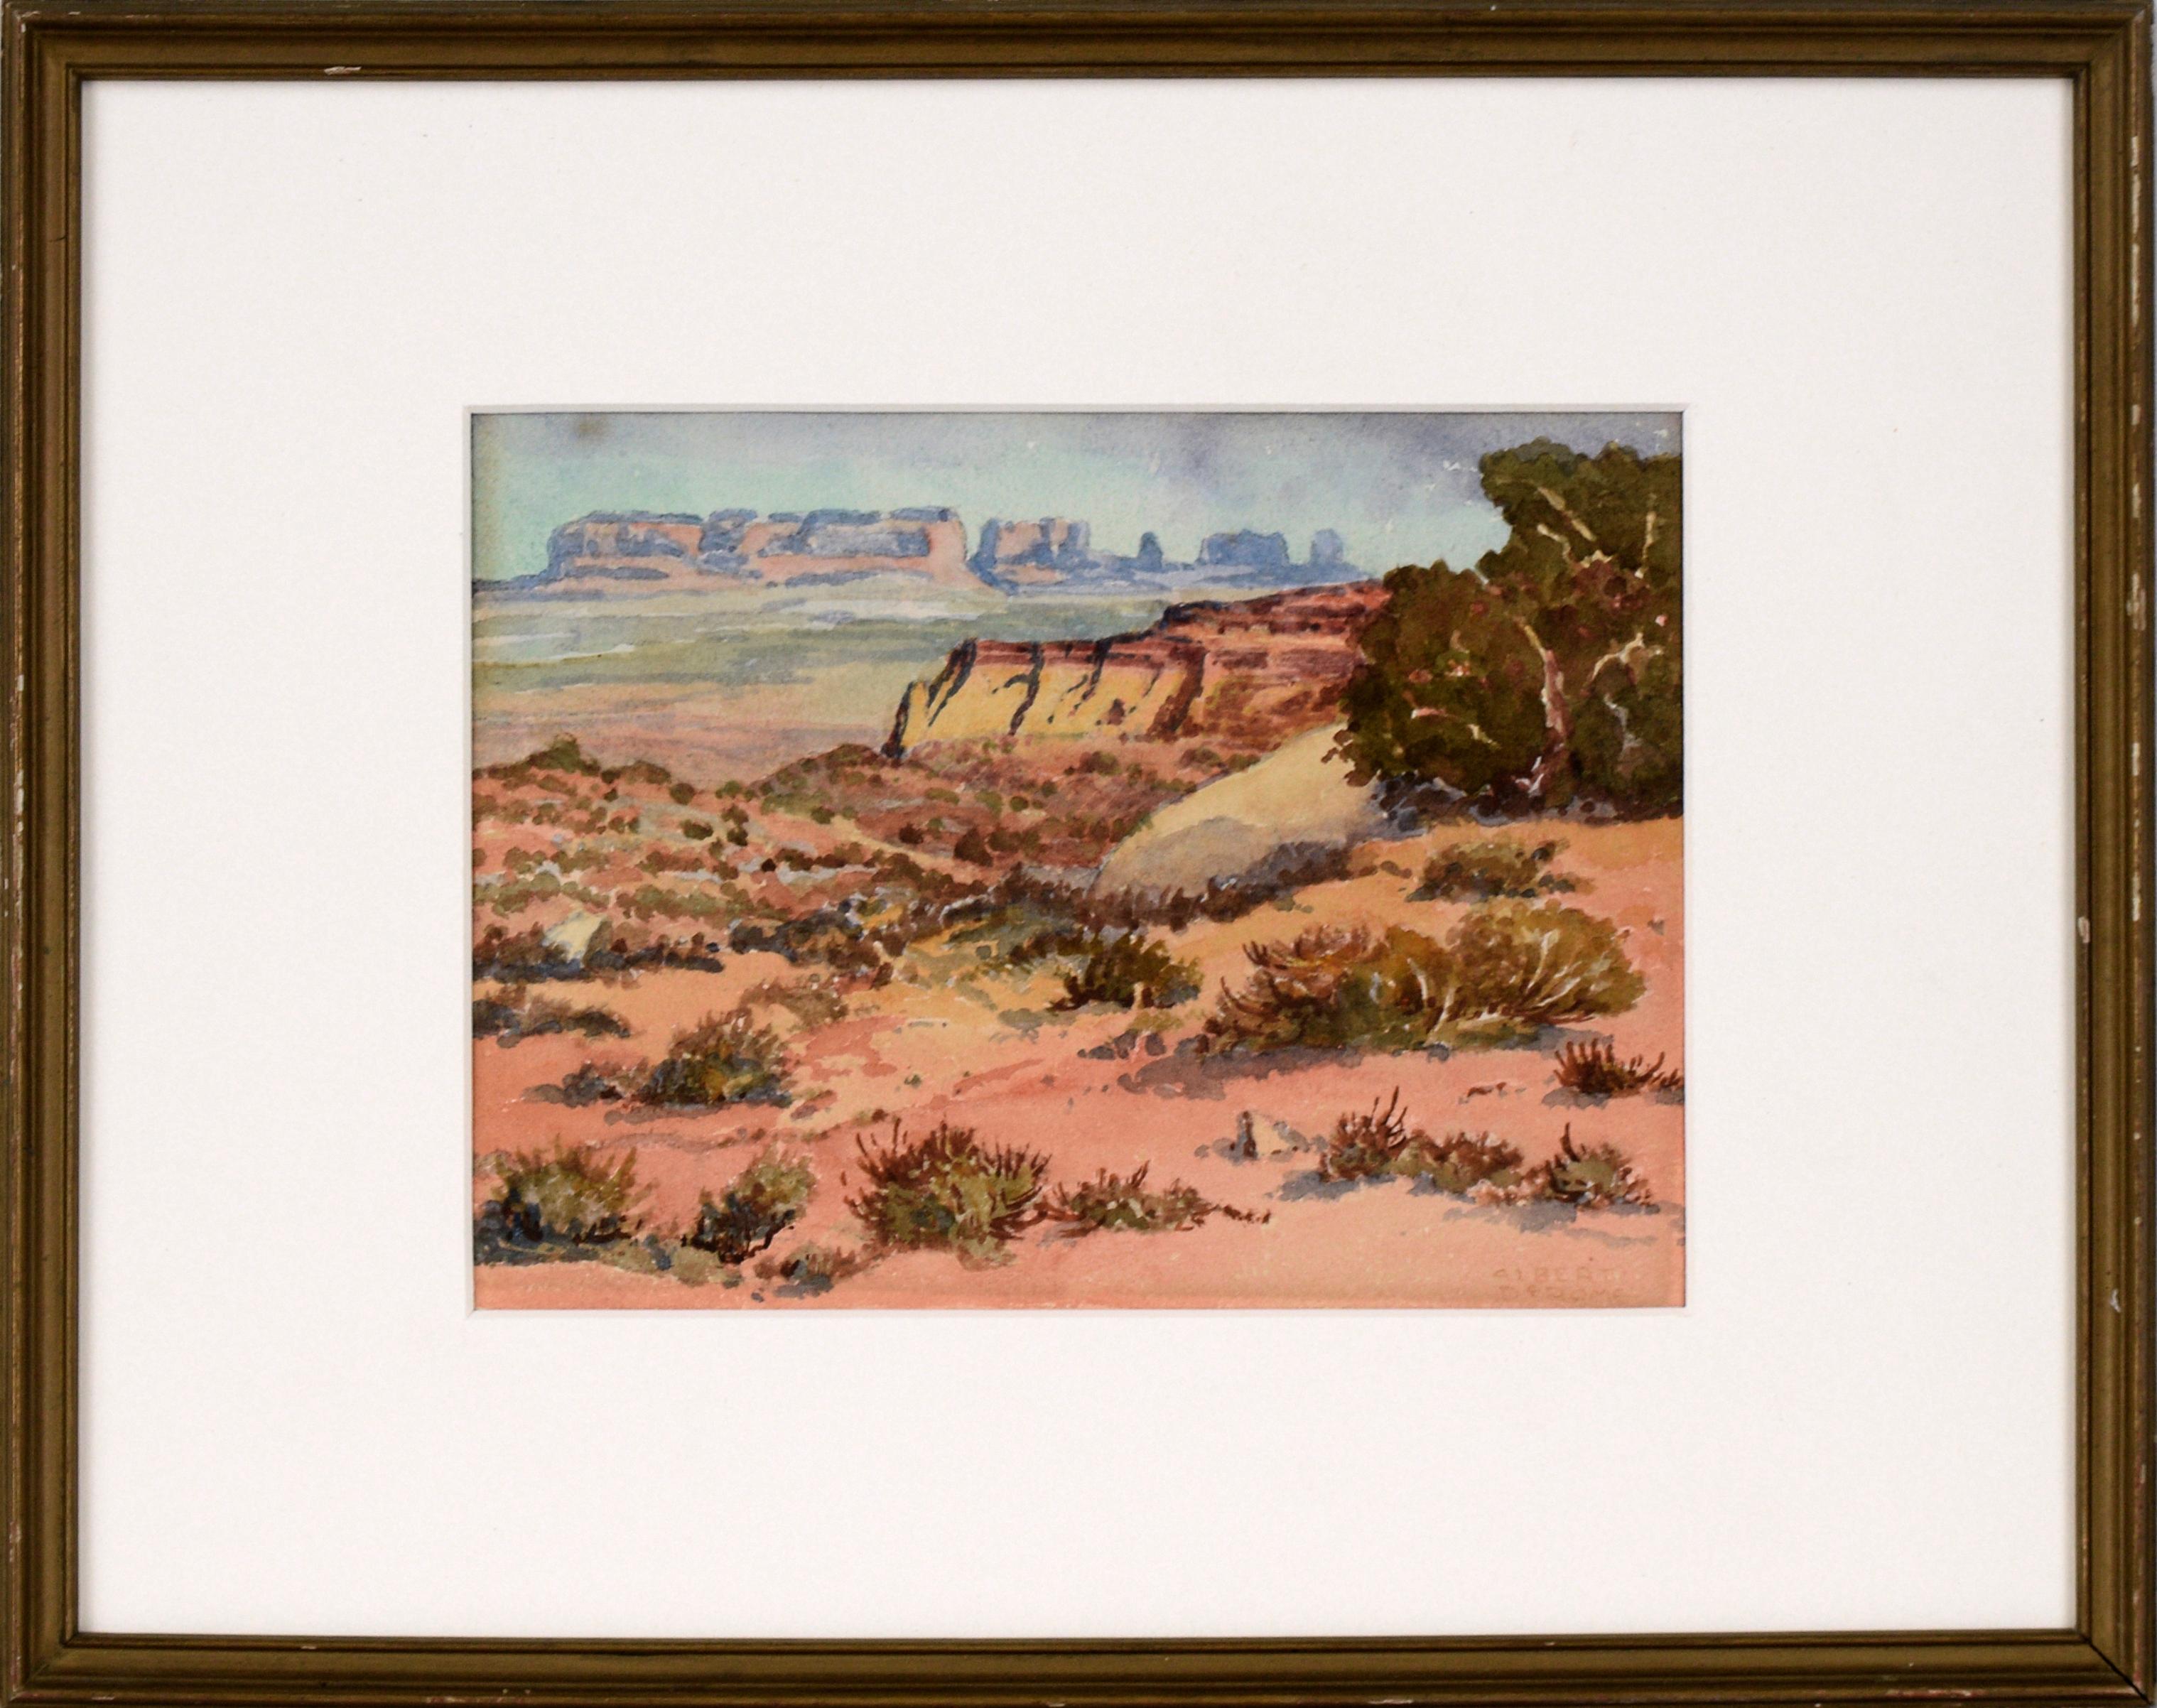 Landscape Art Albert DeRome - "Monument Valley Arizona" - Paysage du désert